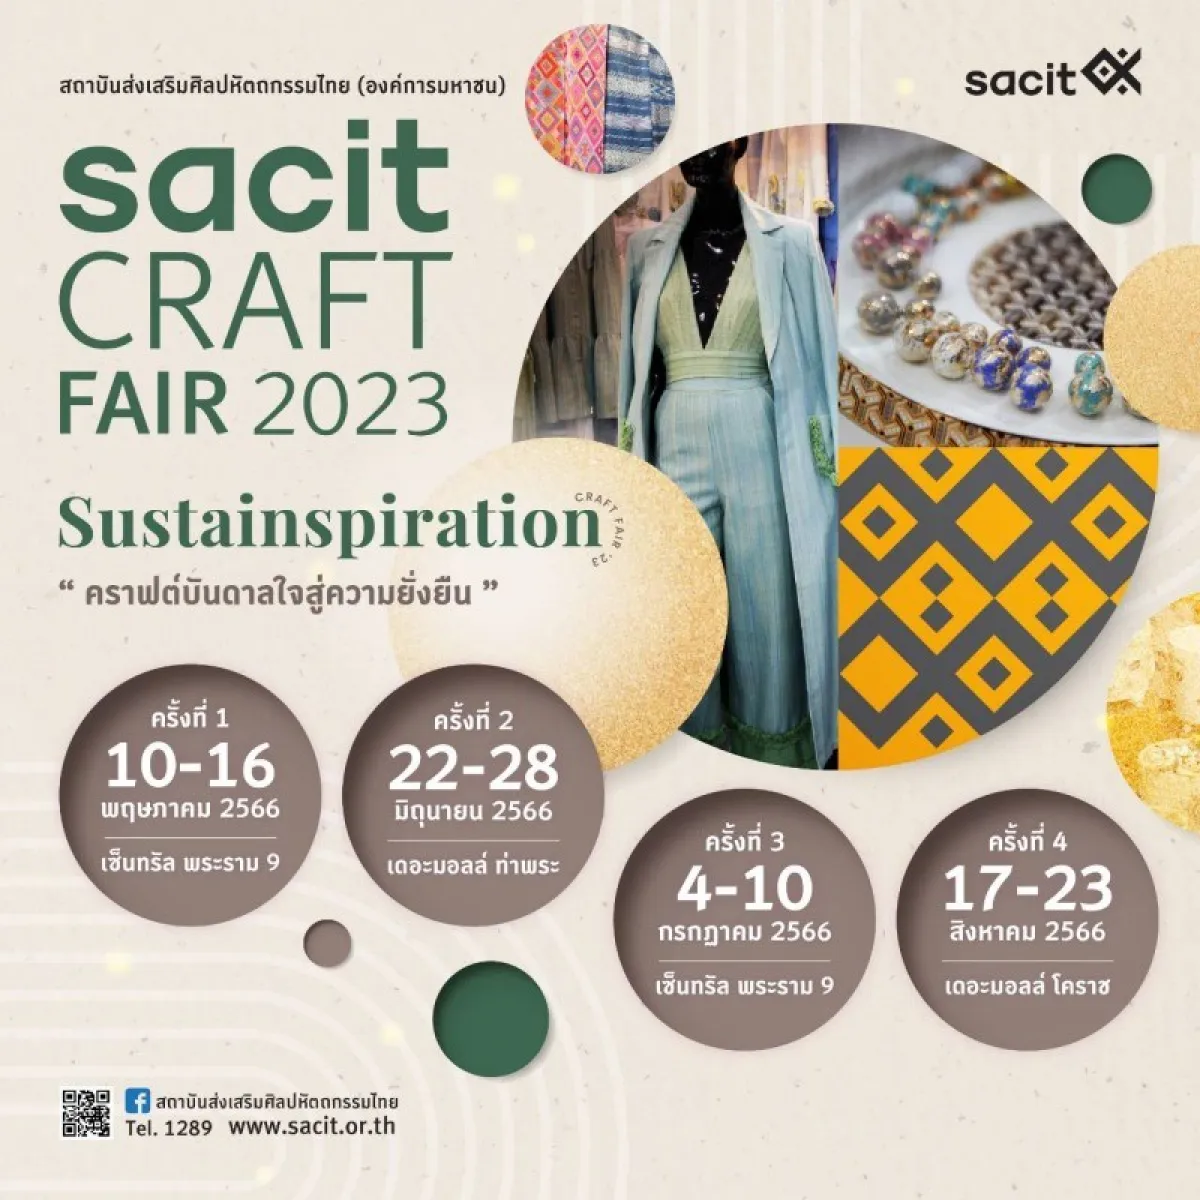 Thai Tourism Calendar: The 3rd Sacit Craft Fair 2023